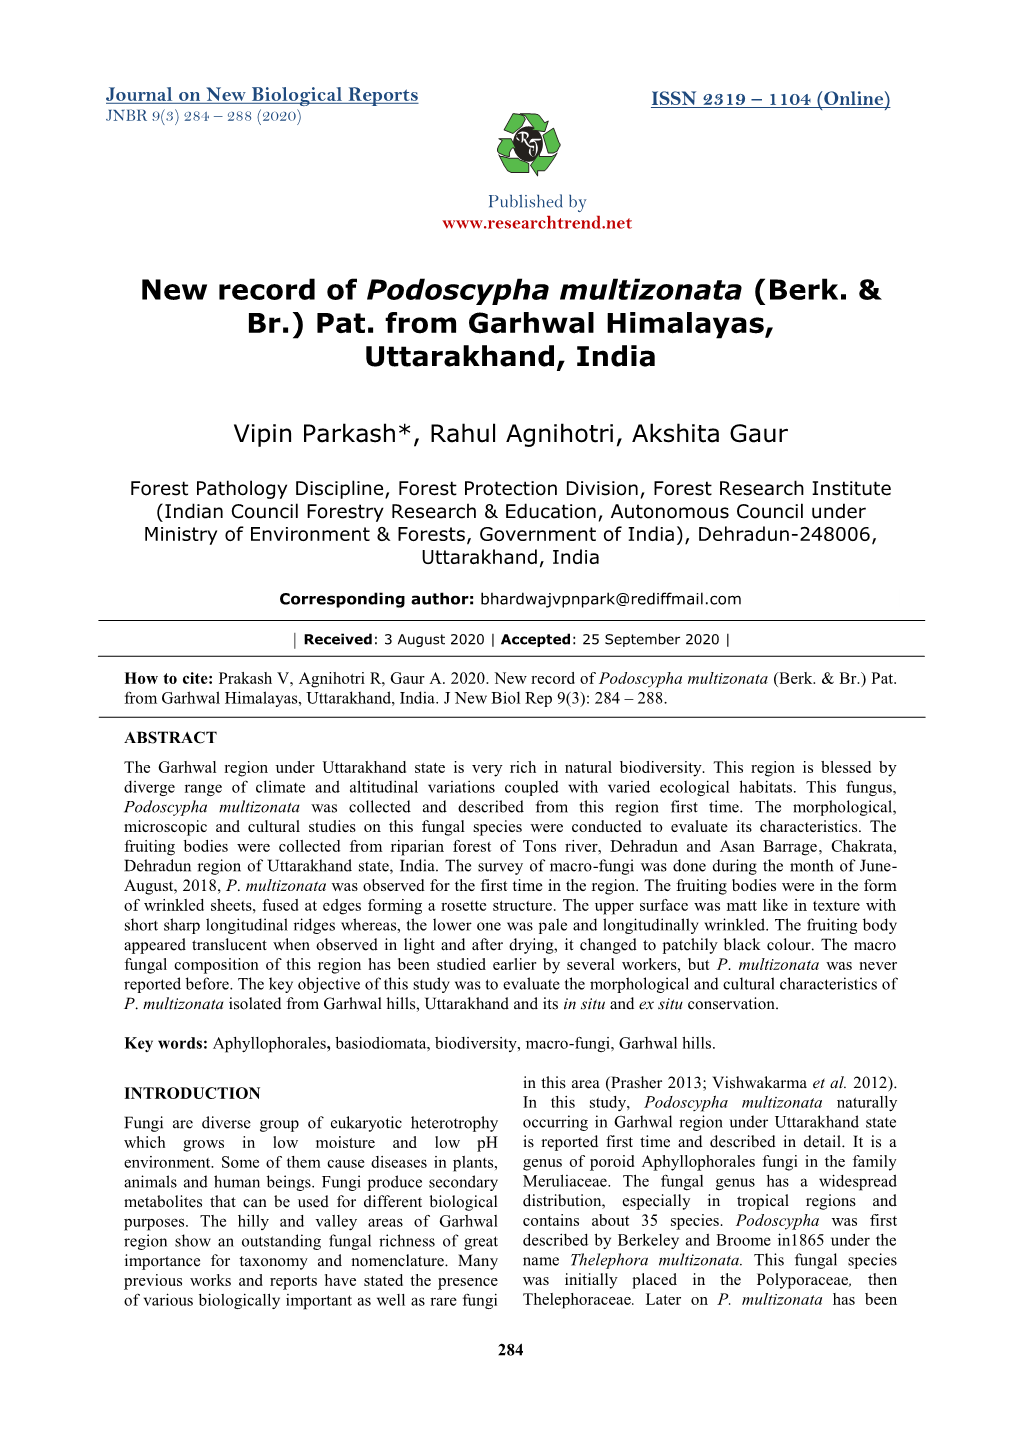 New Record of Podoscypha Multizonata (Berk. & Br.)